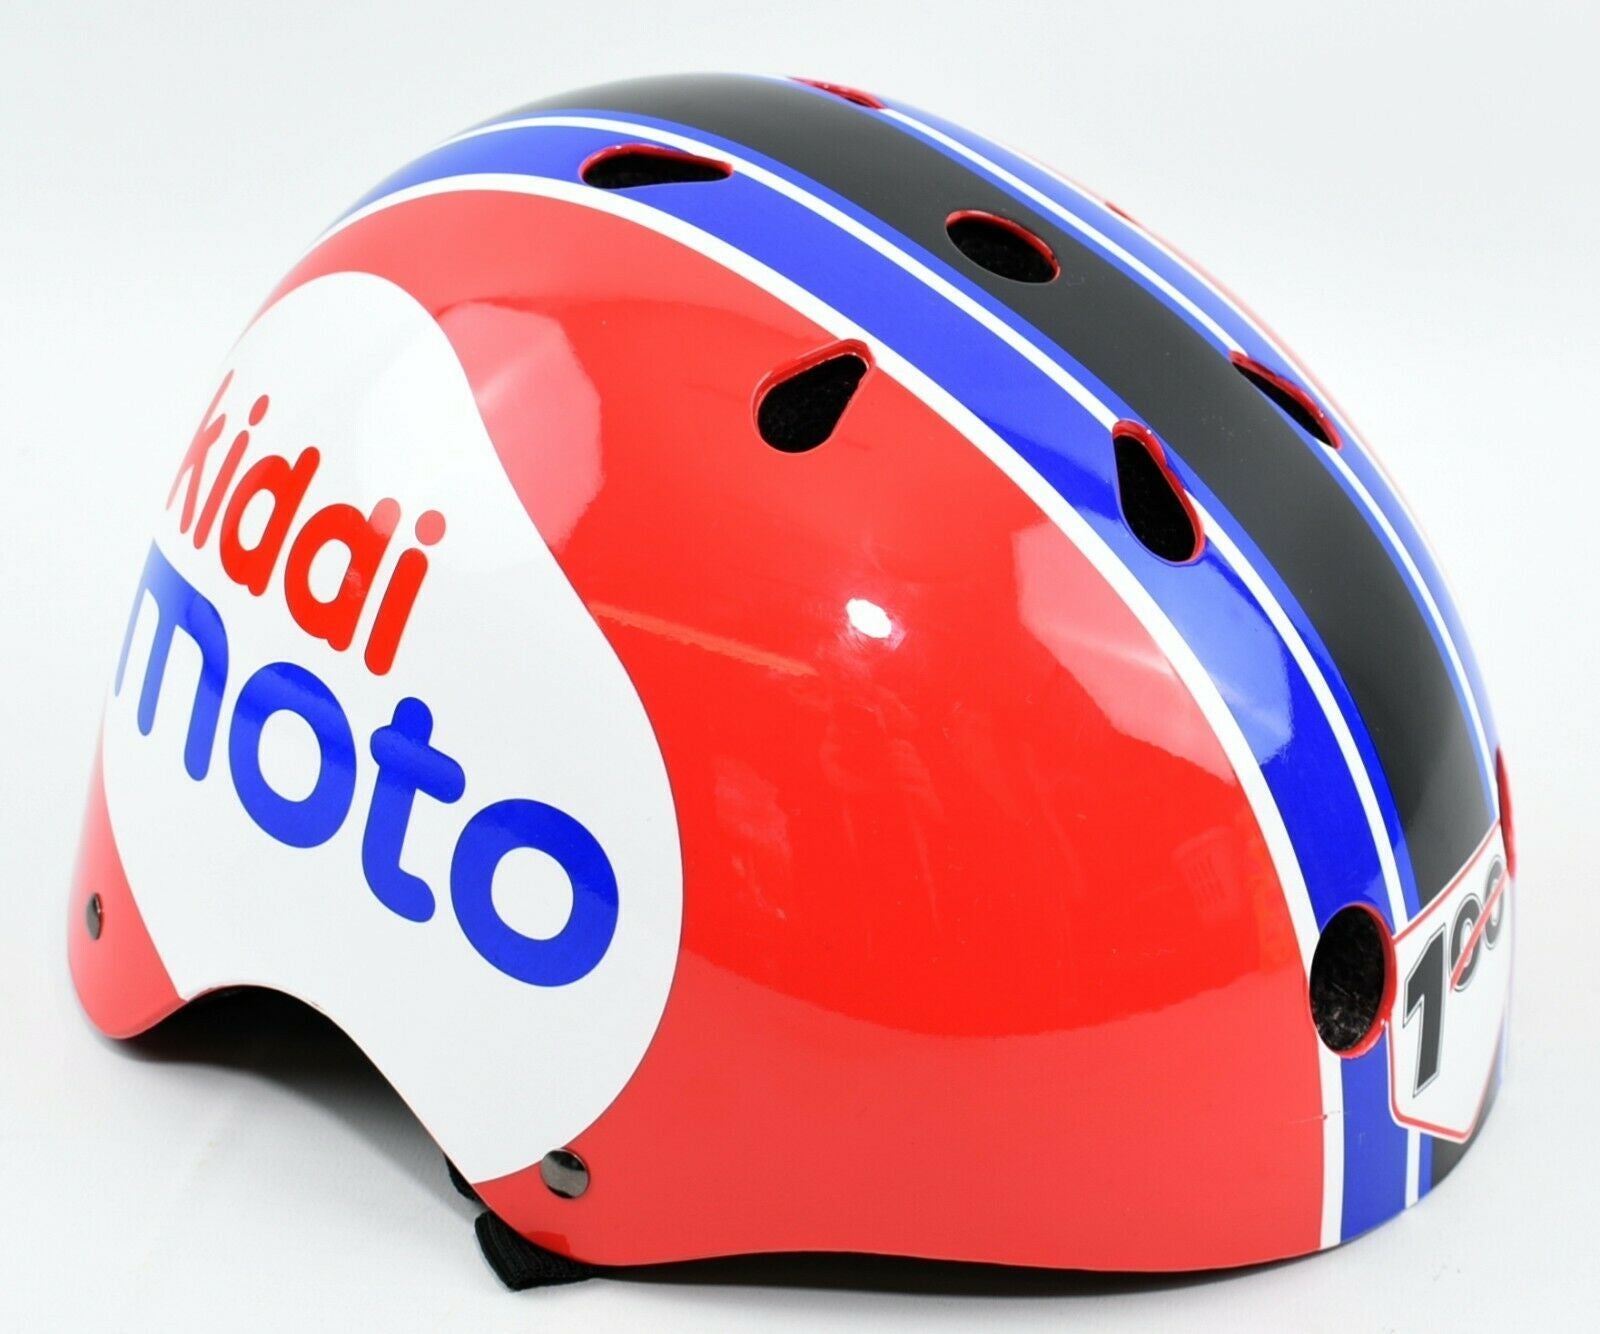 KIDIMOTO Kids' Sports Protective Helmet, size Medium 53-58cm